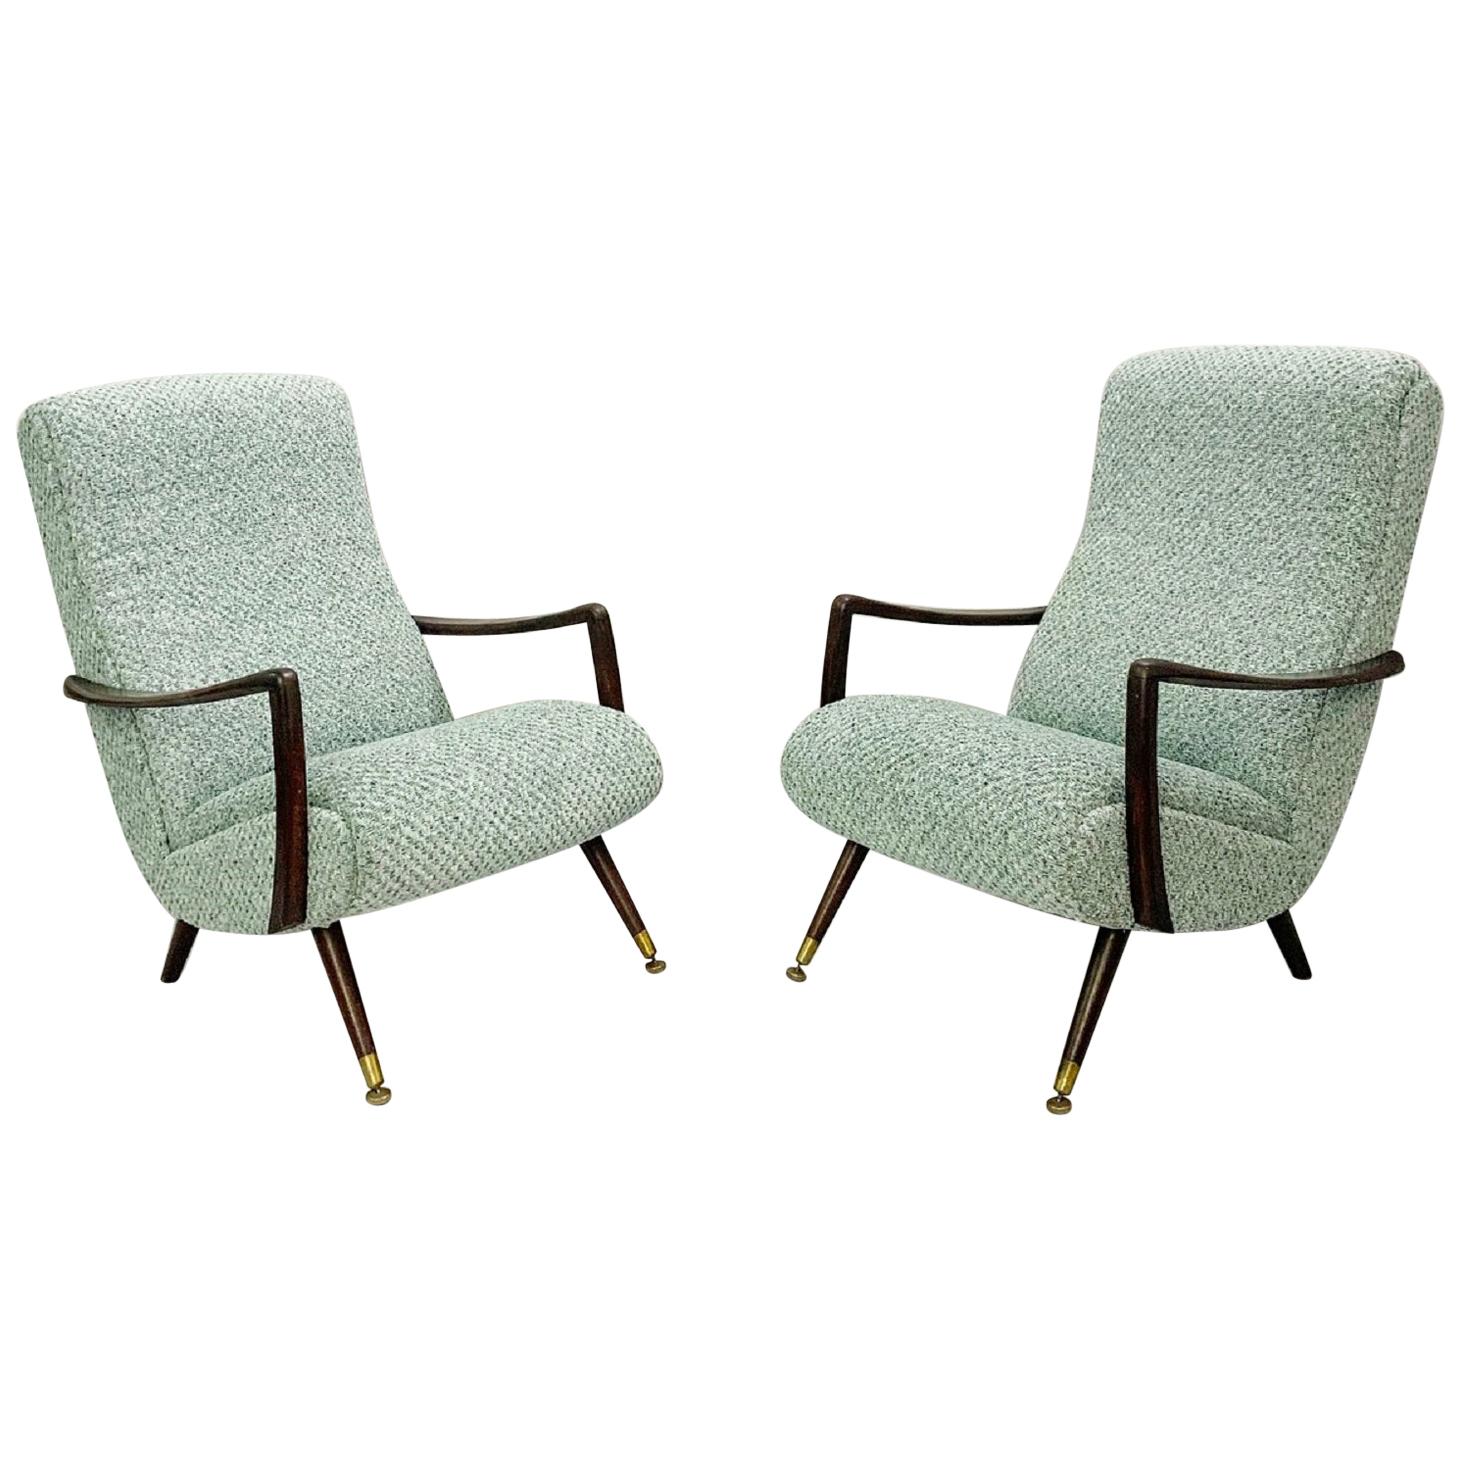 Pair of Italian armchair - New upholstery  c.1950s